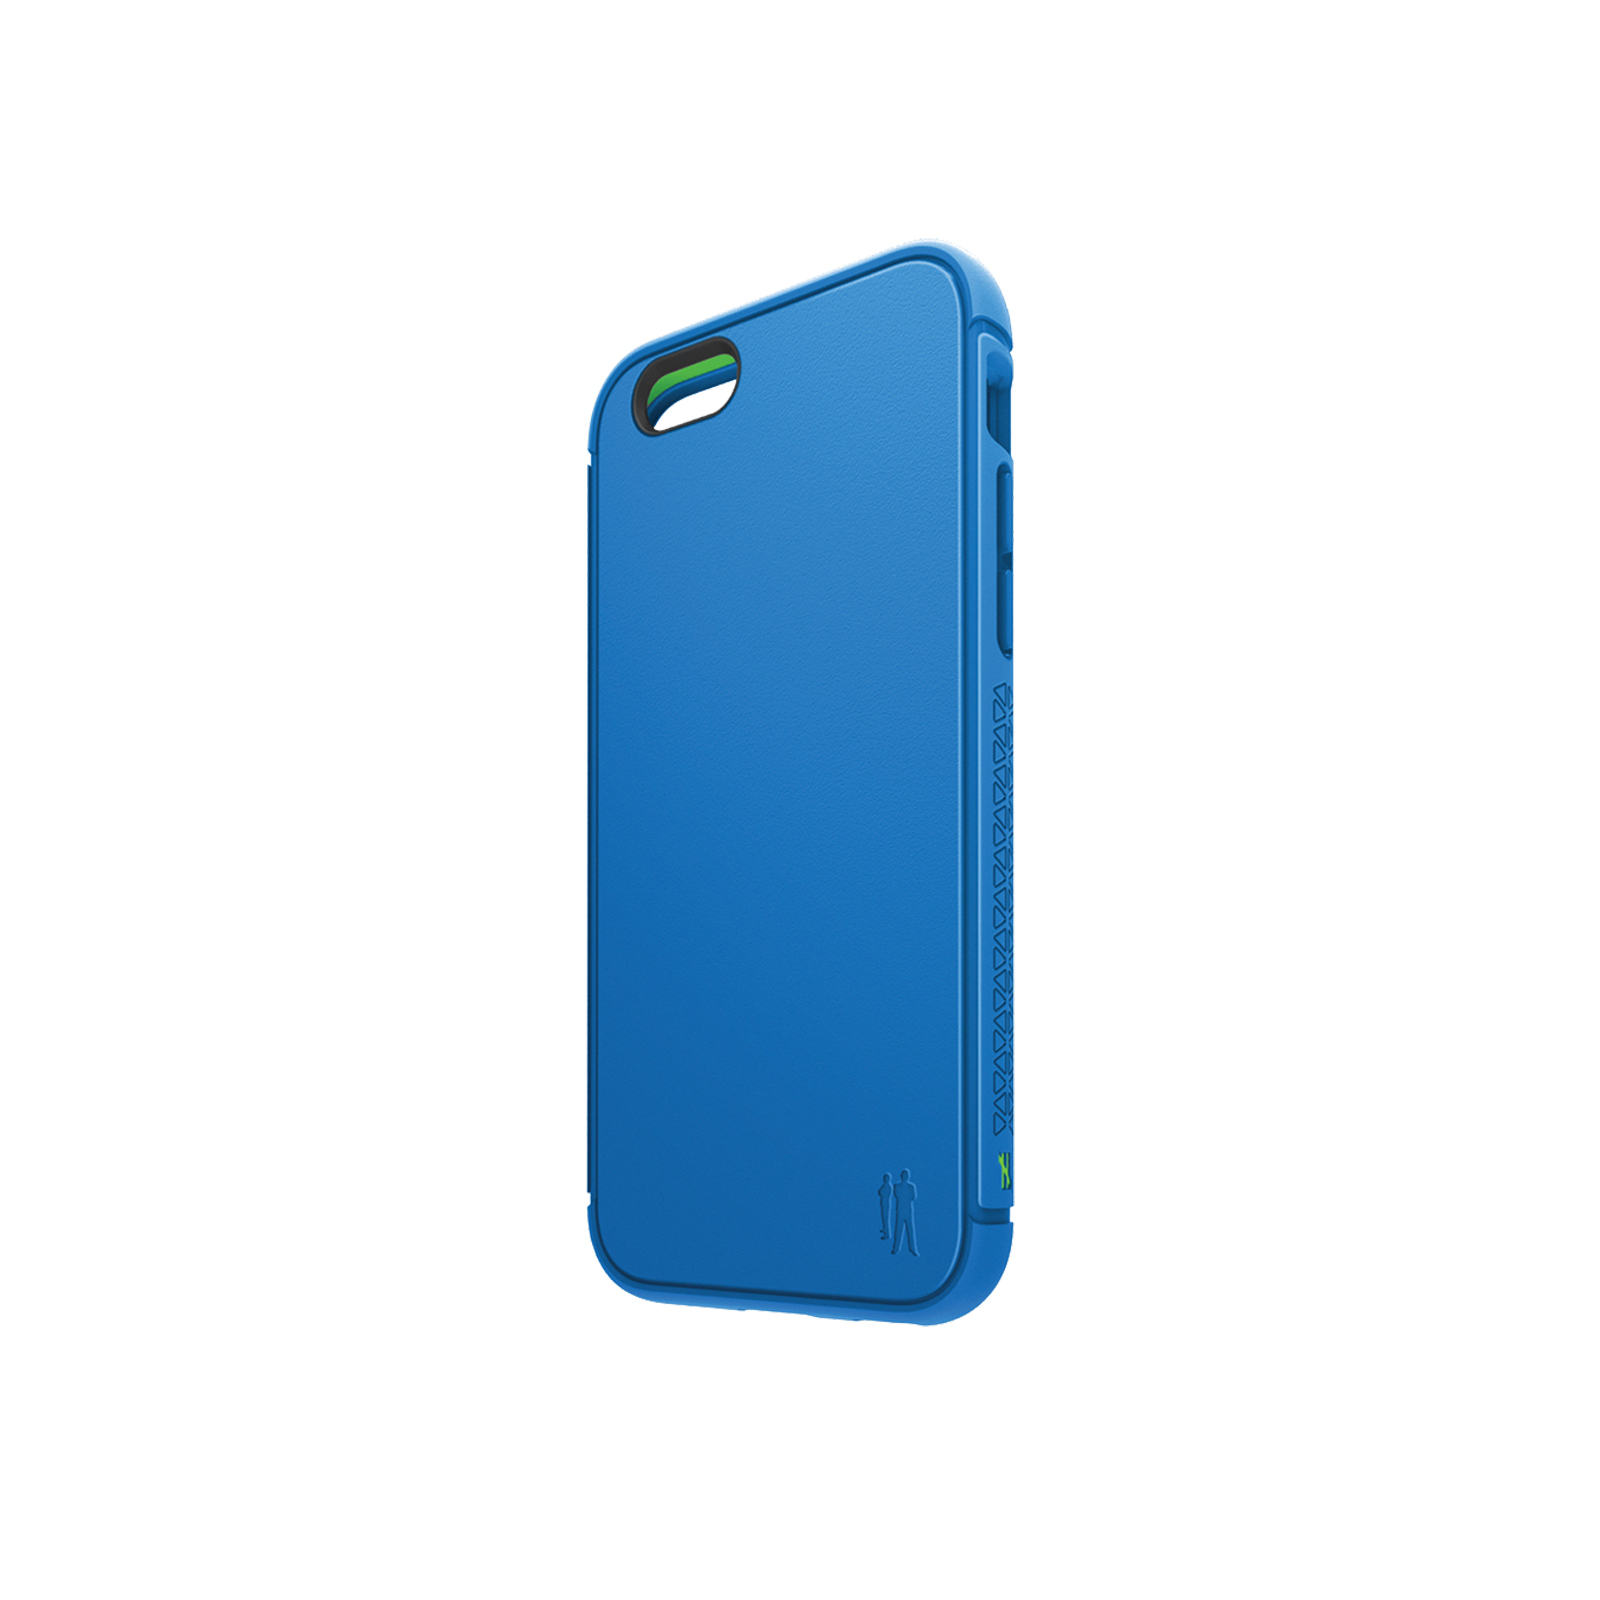 Contact iPhone 7 Plus / 8 Plus Case [Blue]